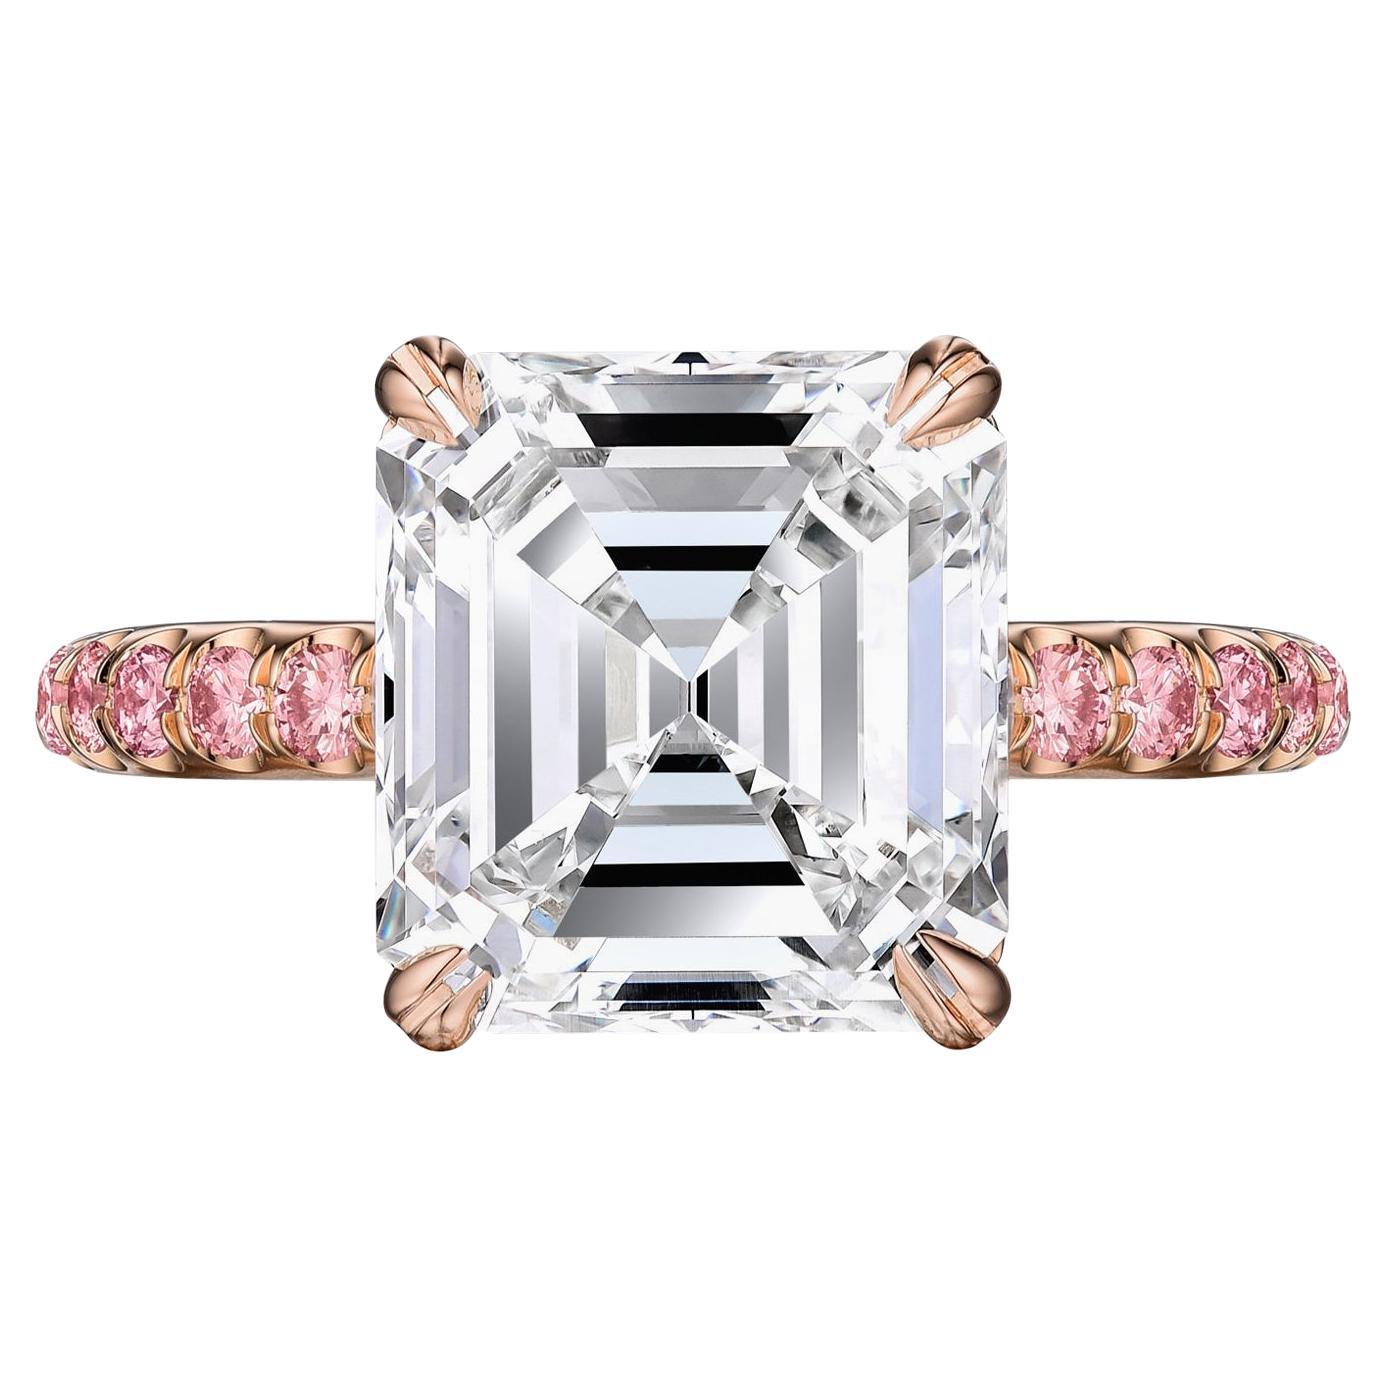 GIA Certified 4.54 Carat Asscher Cut Engagement Ring with Natural Pink Diamonds